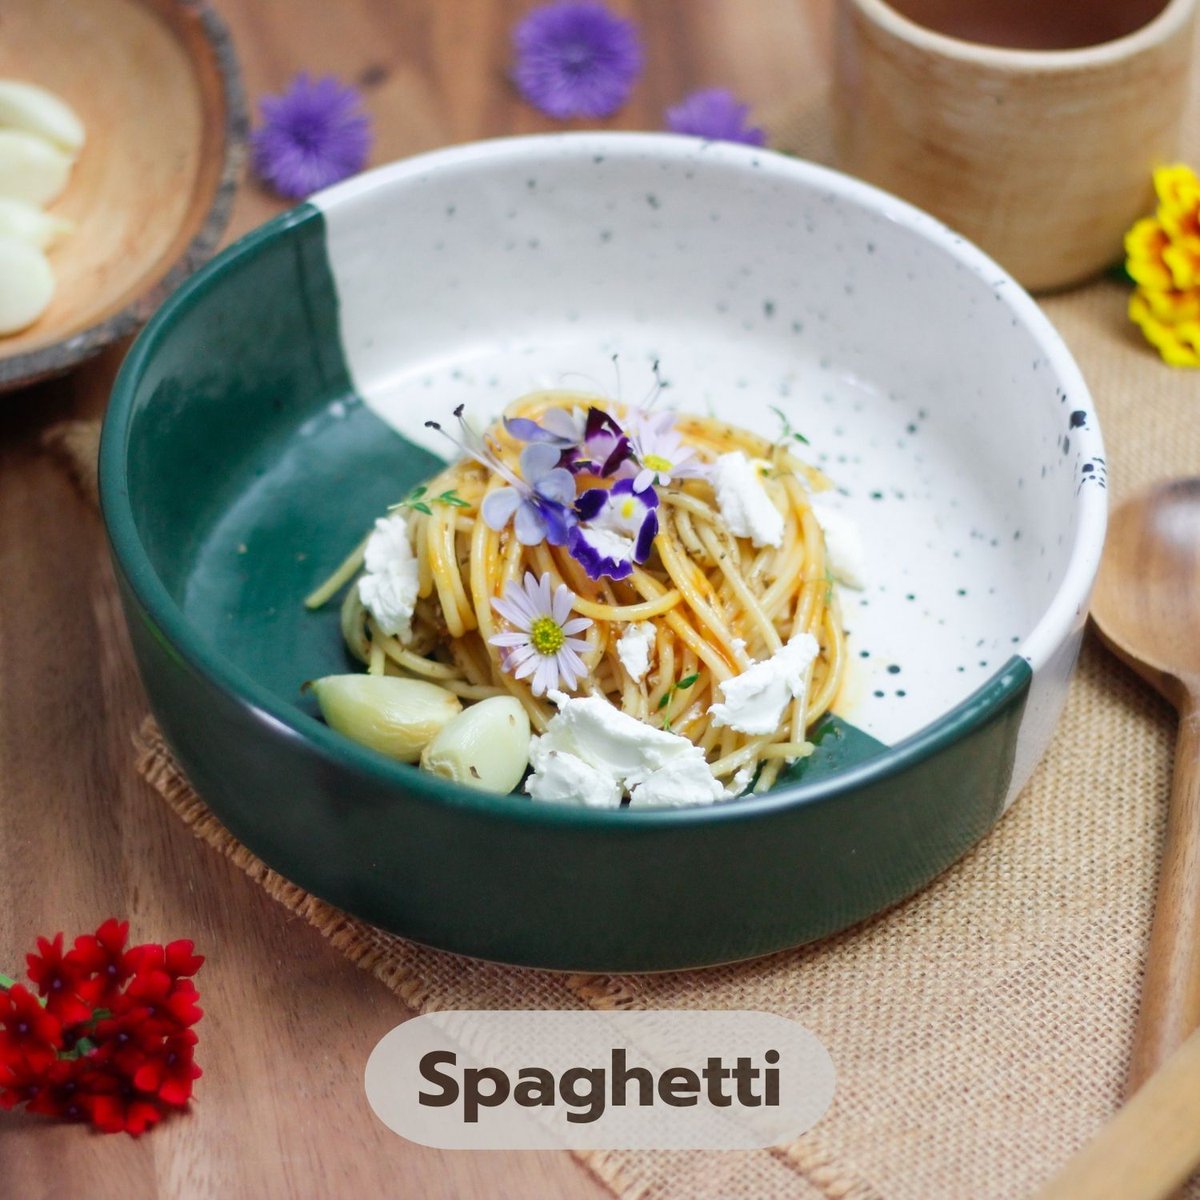 The Passion for Pasta: Explore the 3 Most Popular Pasta Varieties Worldwide! 
.
( Spaghetti, Gnocchi, Fettuccine )

#PastaPassion #NoodleNirvana #PastaPerfection #PastaLover #TwirlAndTast #SaucyPasta #ItalianEats #PastaParadise #NoodleObsession #CarbCravings
#SatisfyingSauces